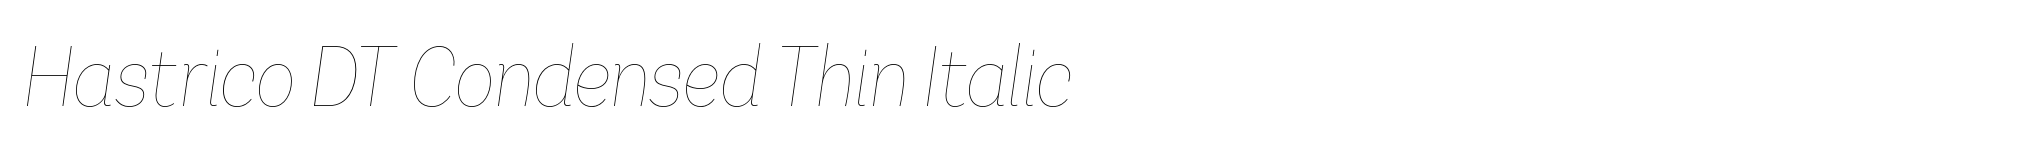 Hastrico DT Condensed Thin Italic image